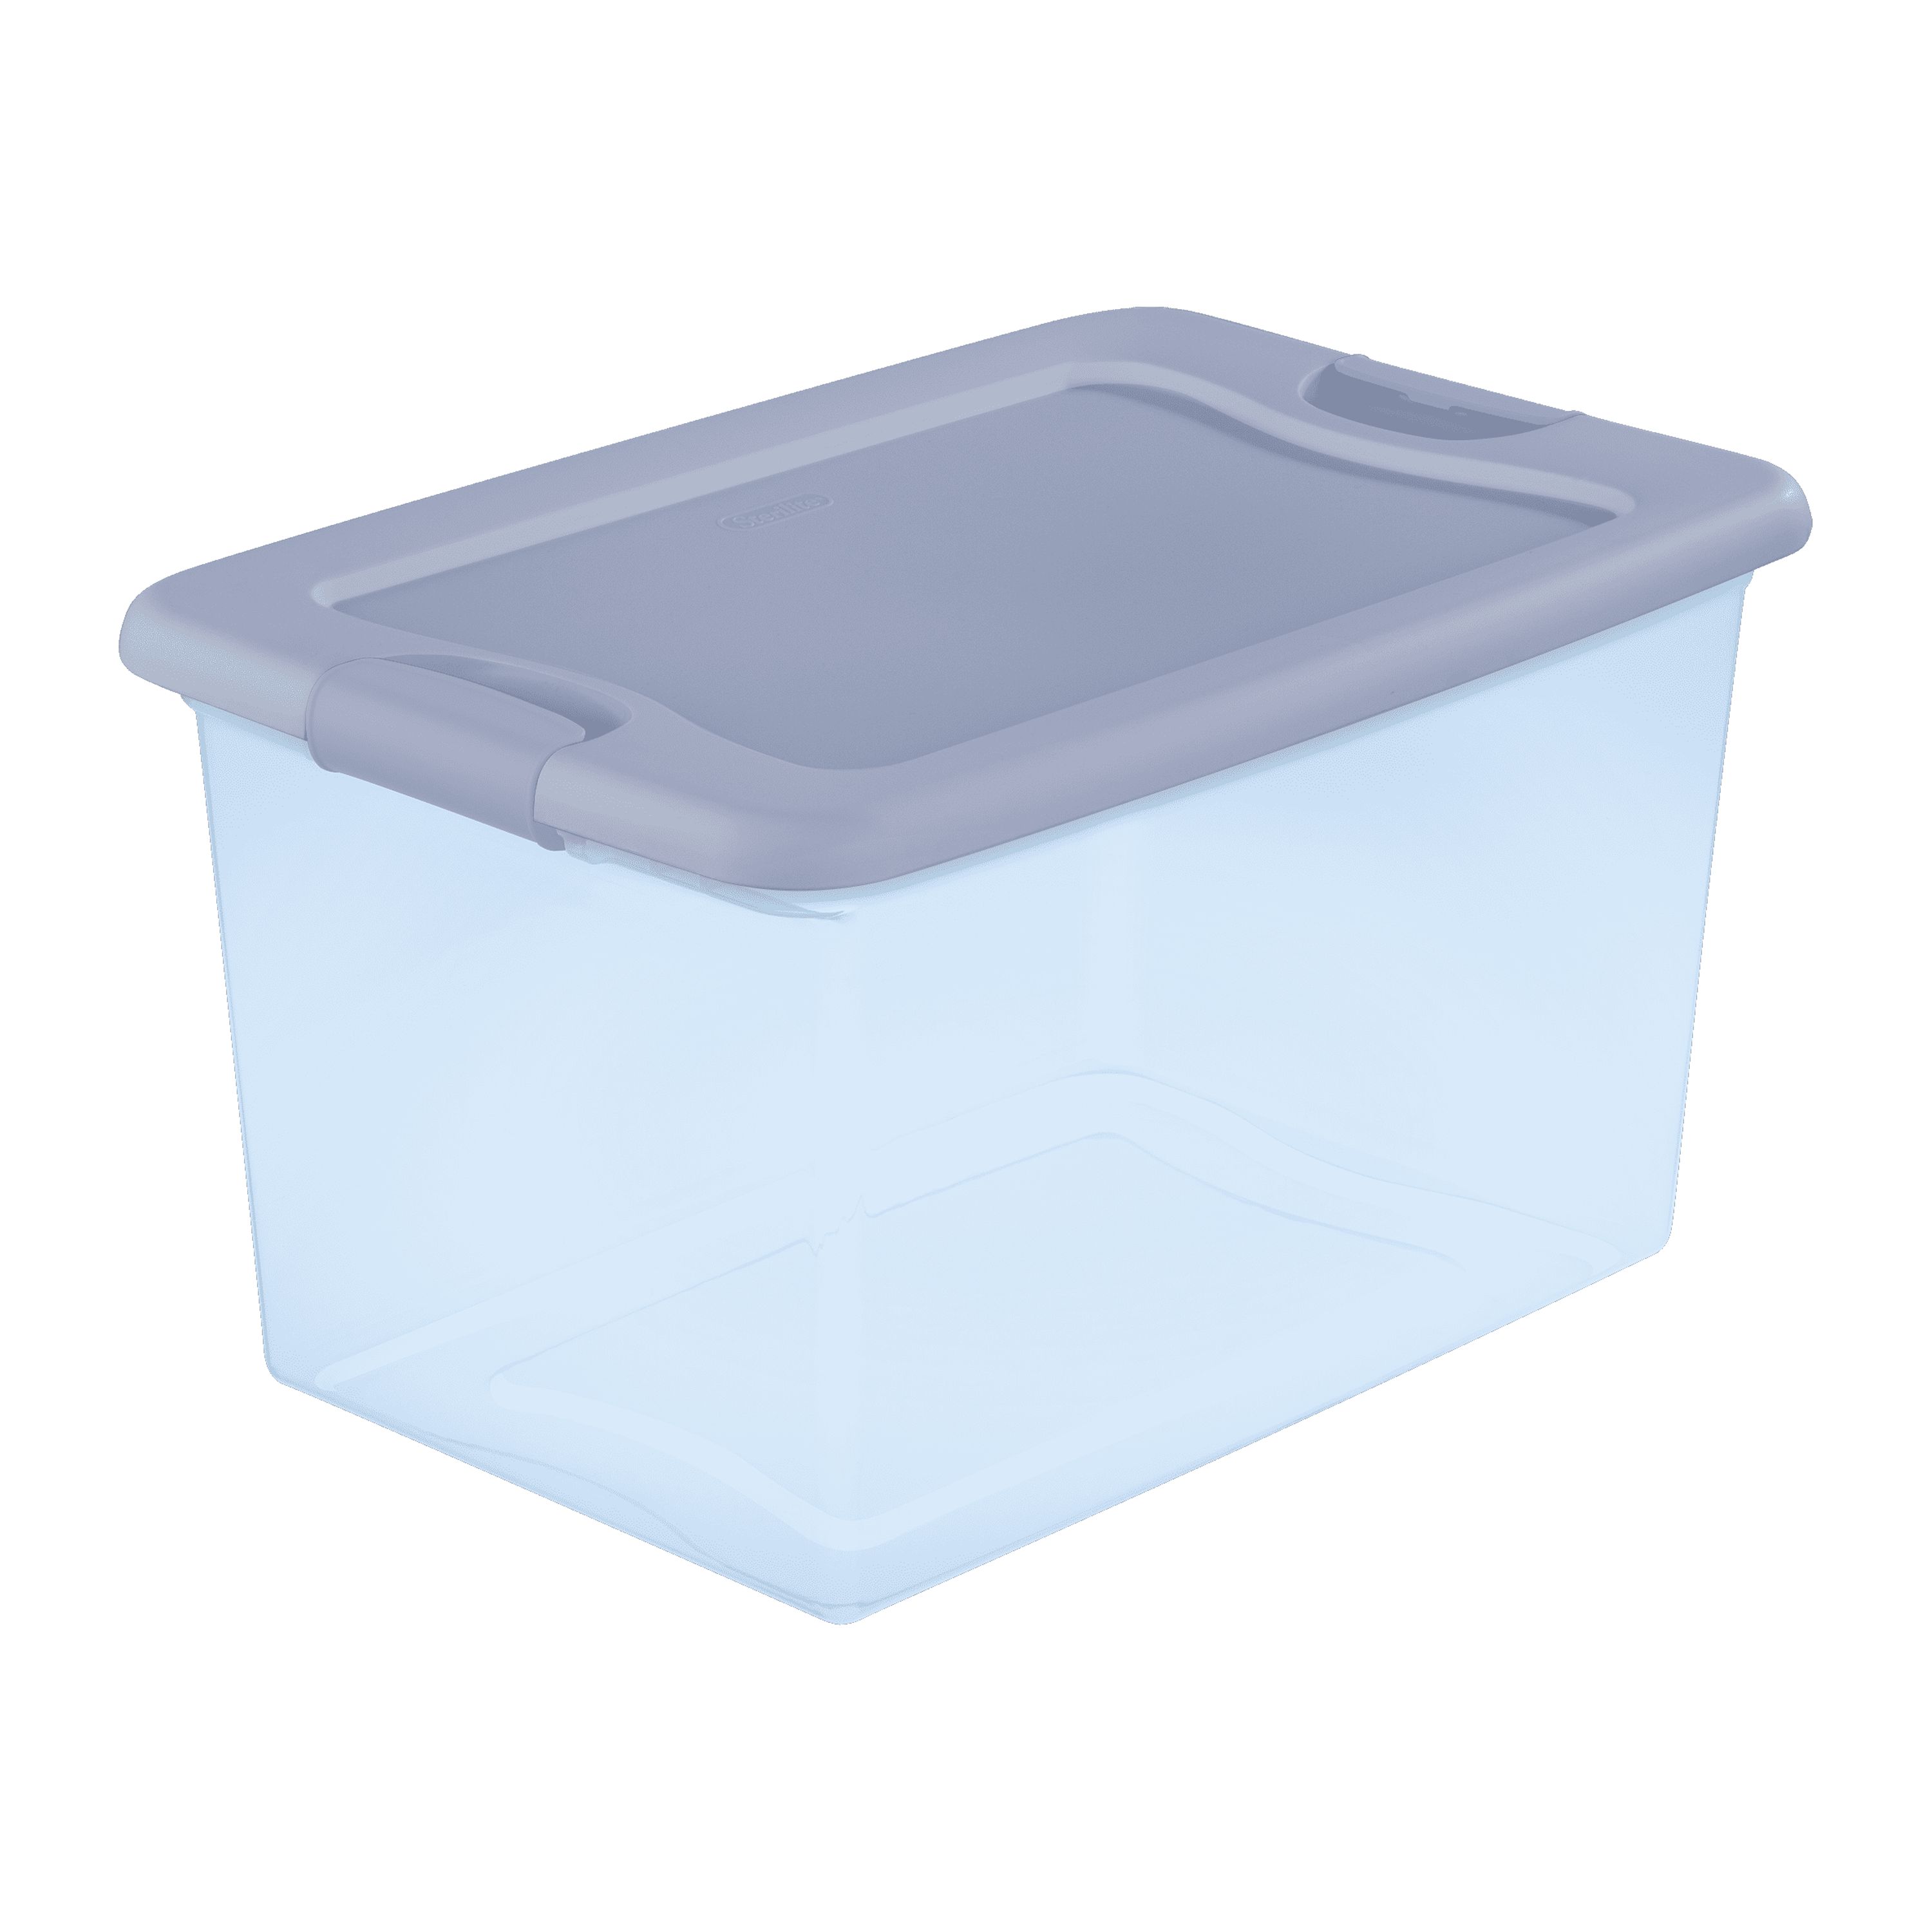 Sterilite 64 Qt. Latching Box Plastic, Blue Tint, Set of 6 - image 3 of 4